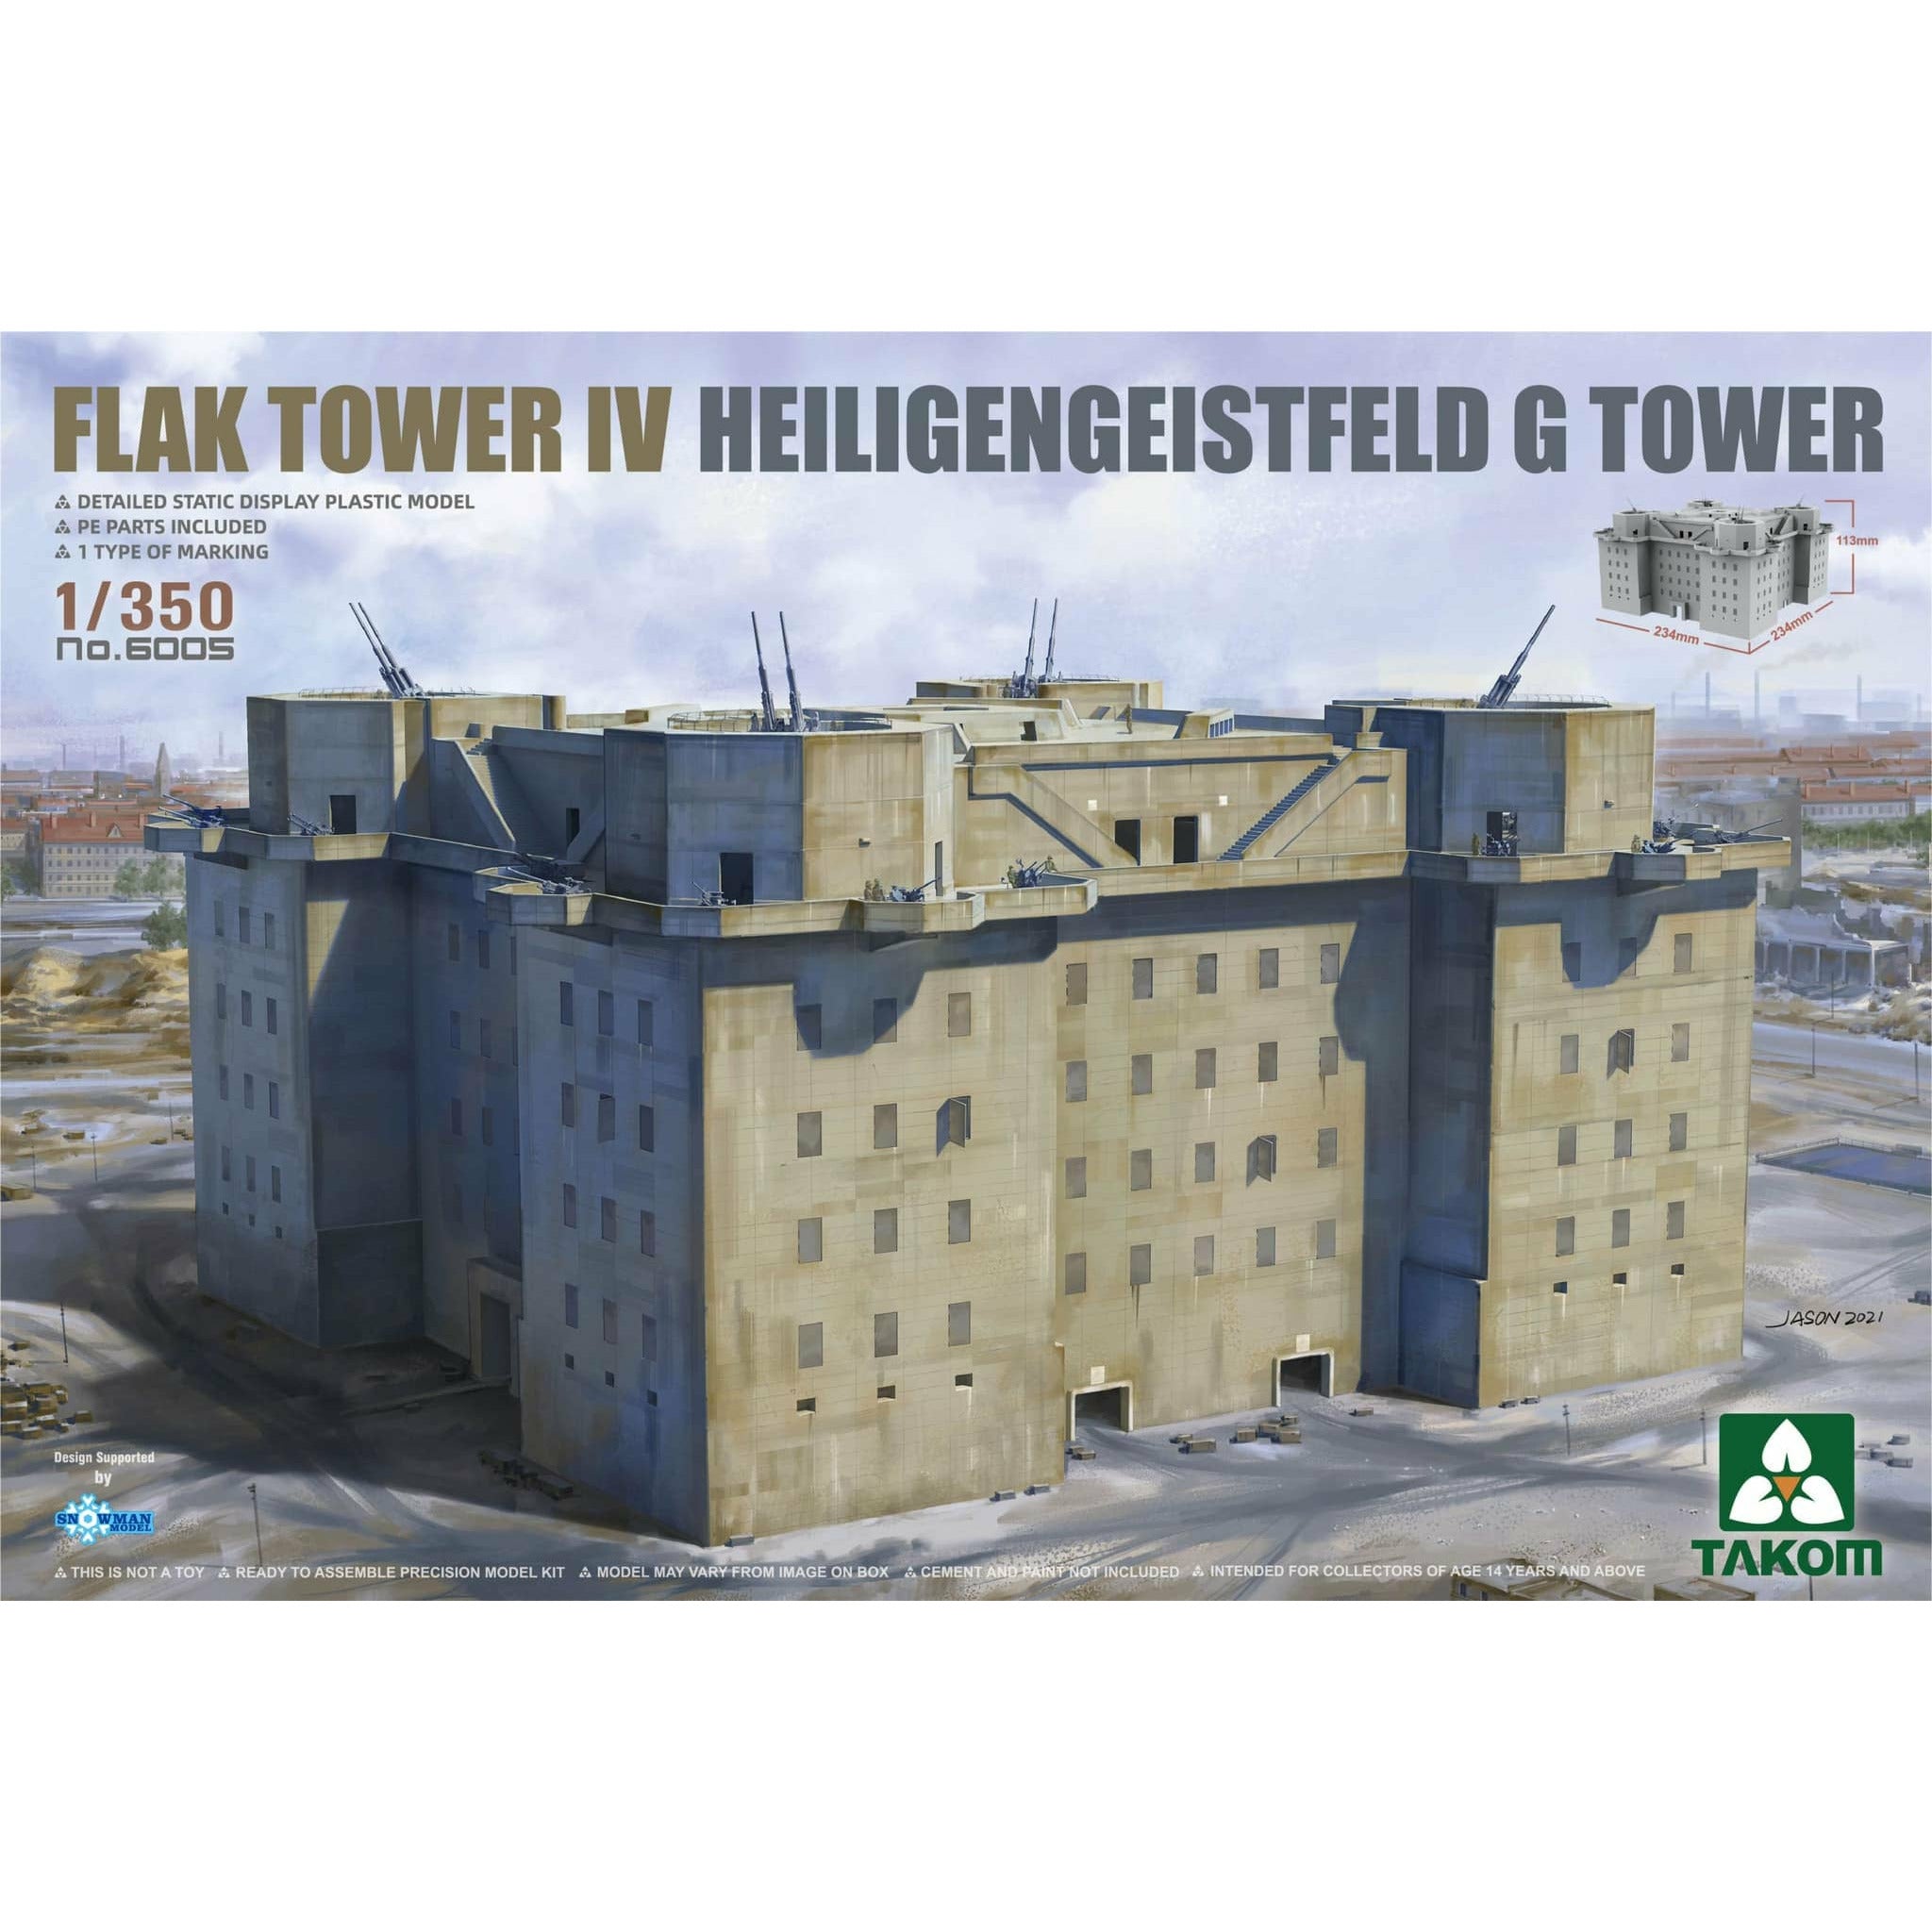 Flak Tower IV Heiligengeistfeld G Tower #6005 1/350 Scenery Kit by Takom